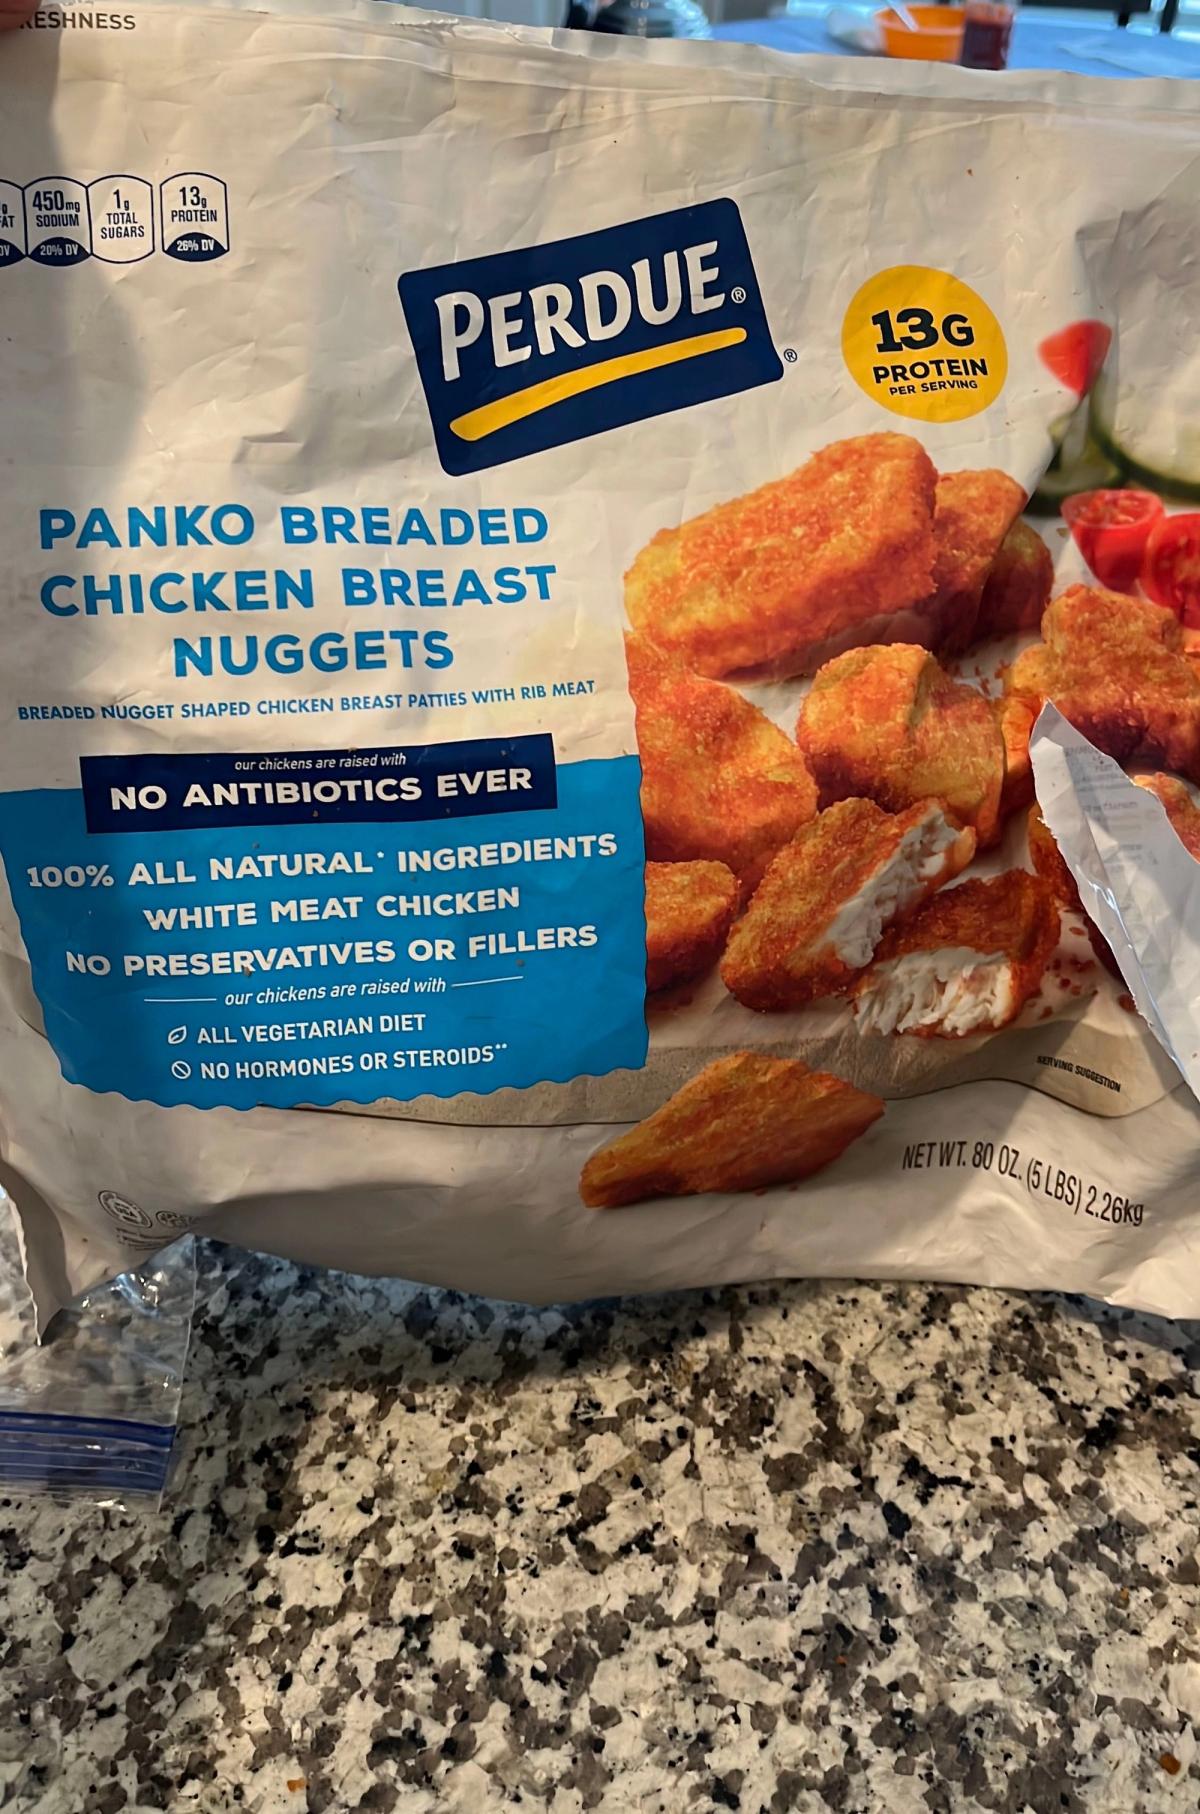 PERDUE® Panko Chicken Nuggets, 82423